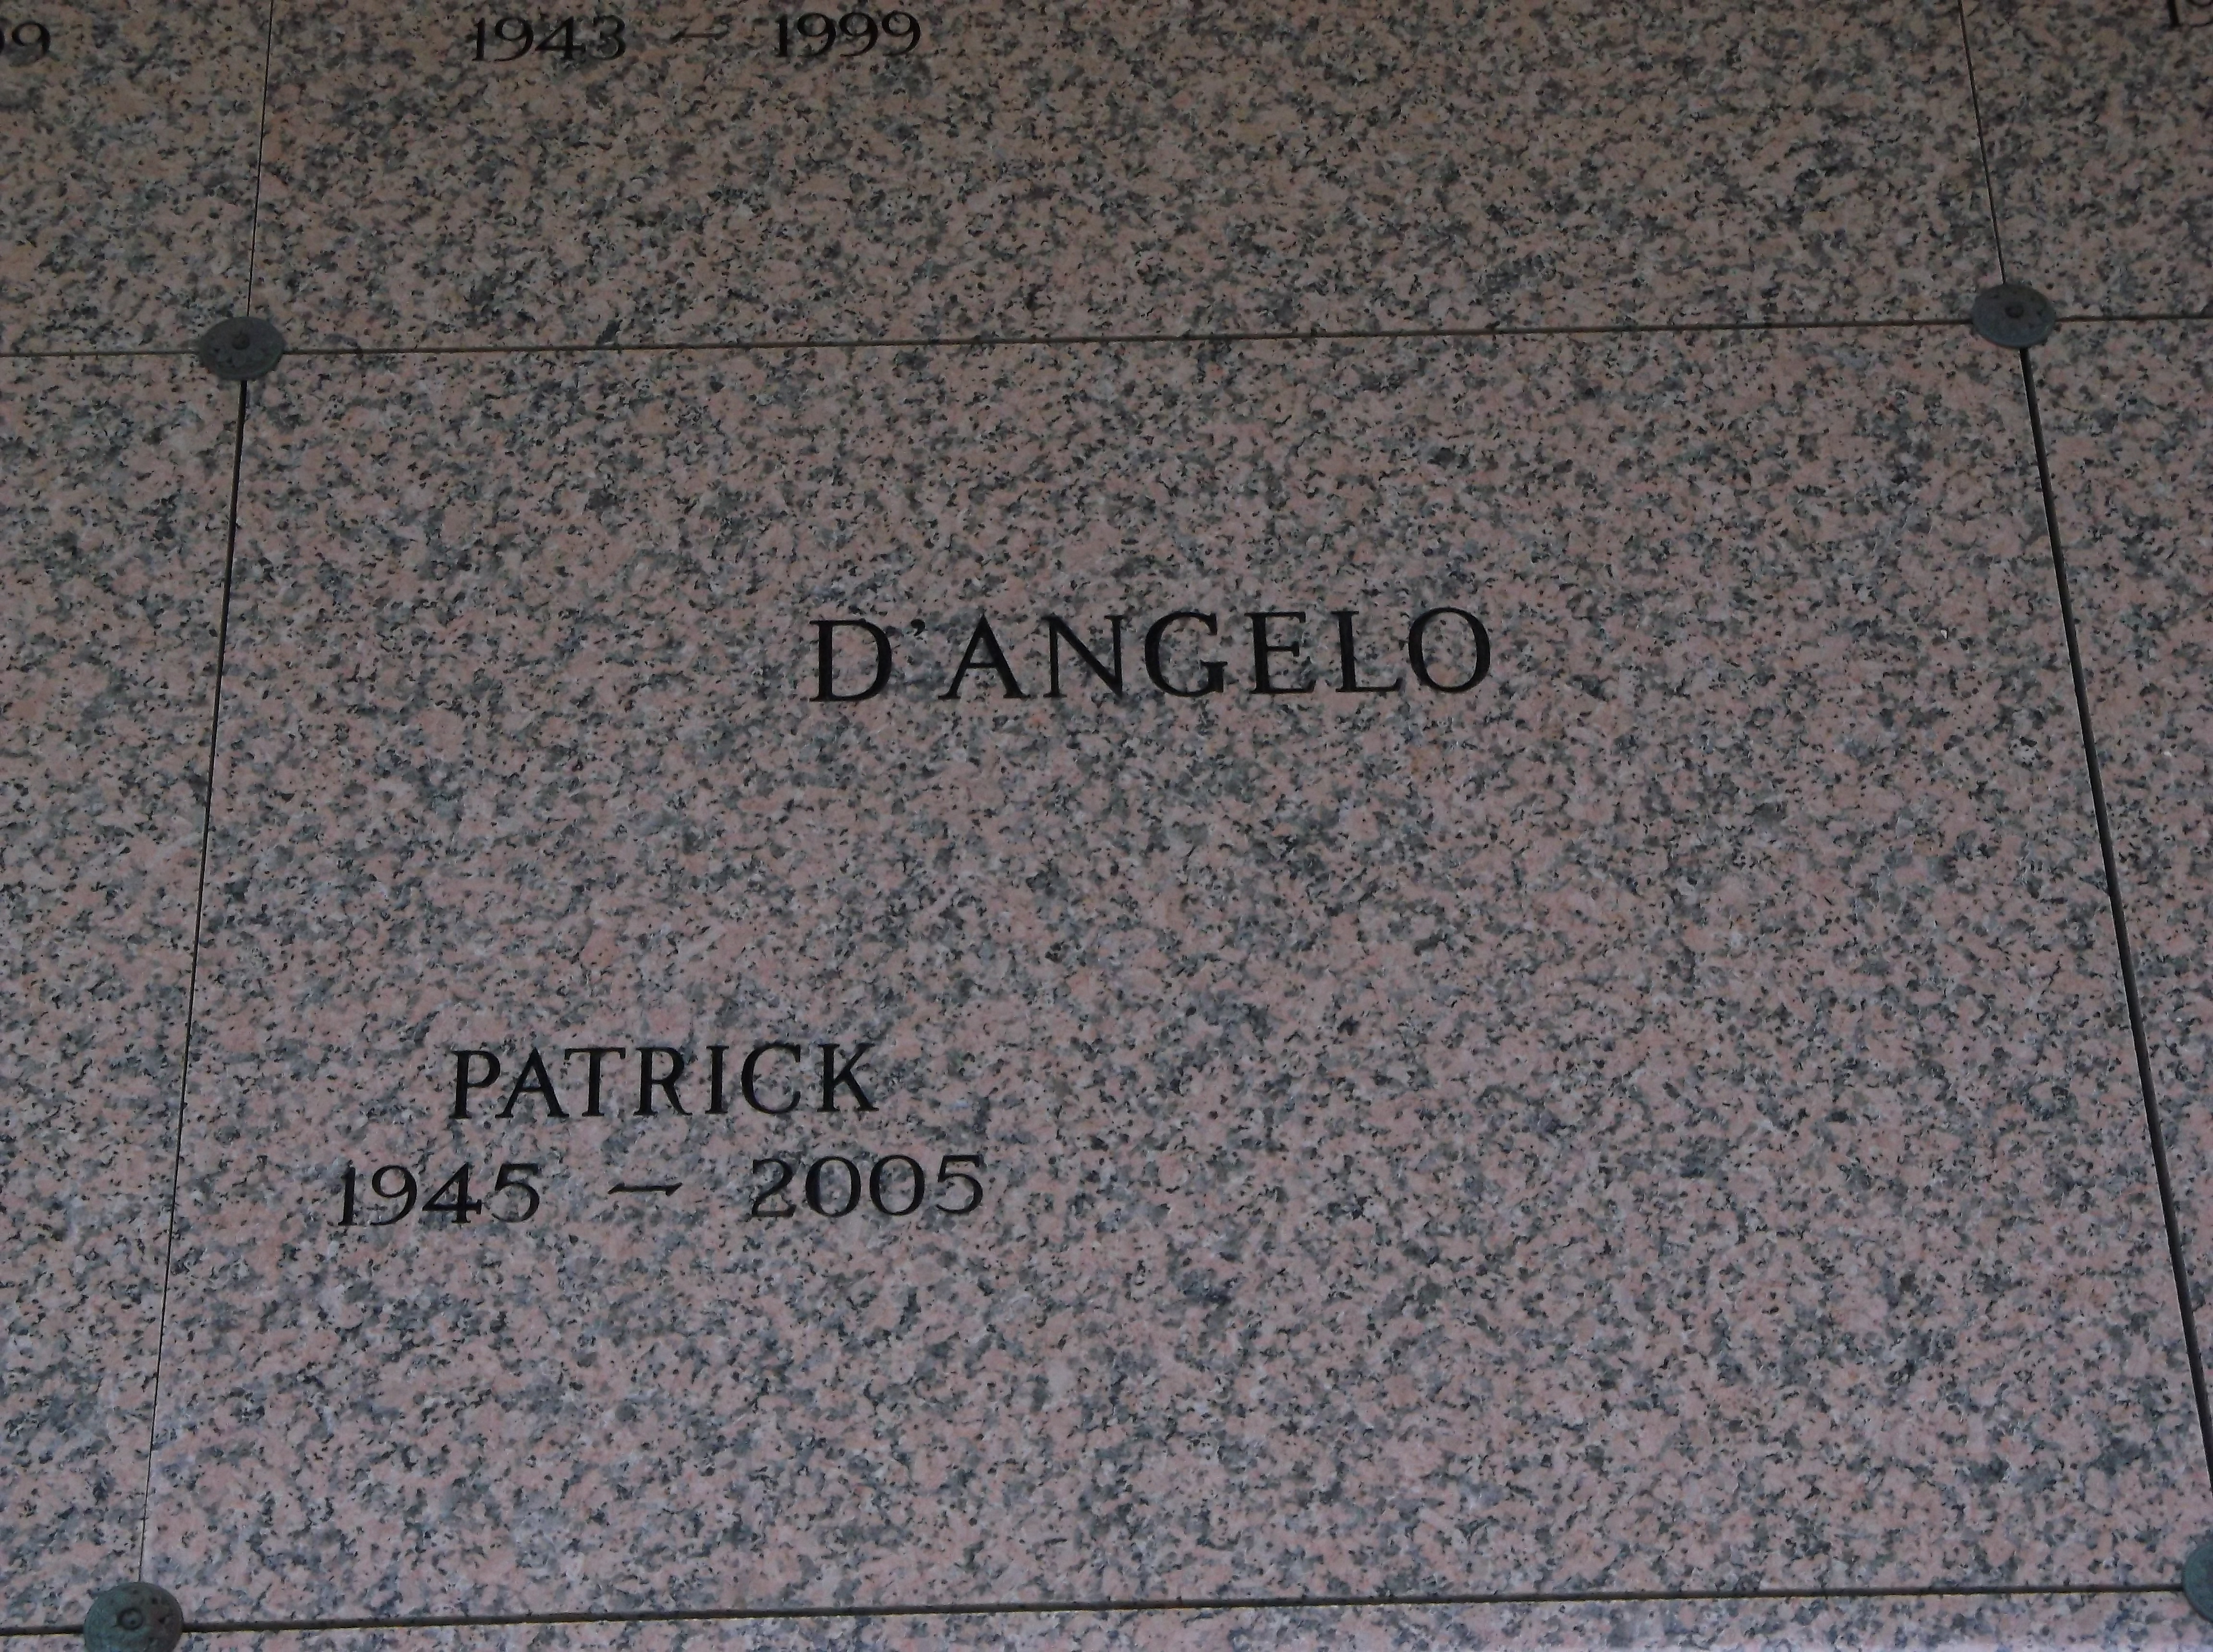 Patrick D'Angelo